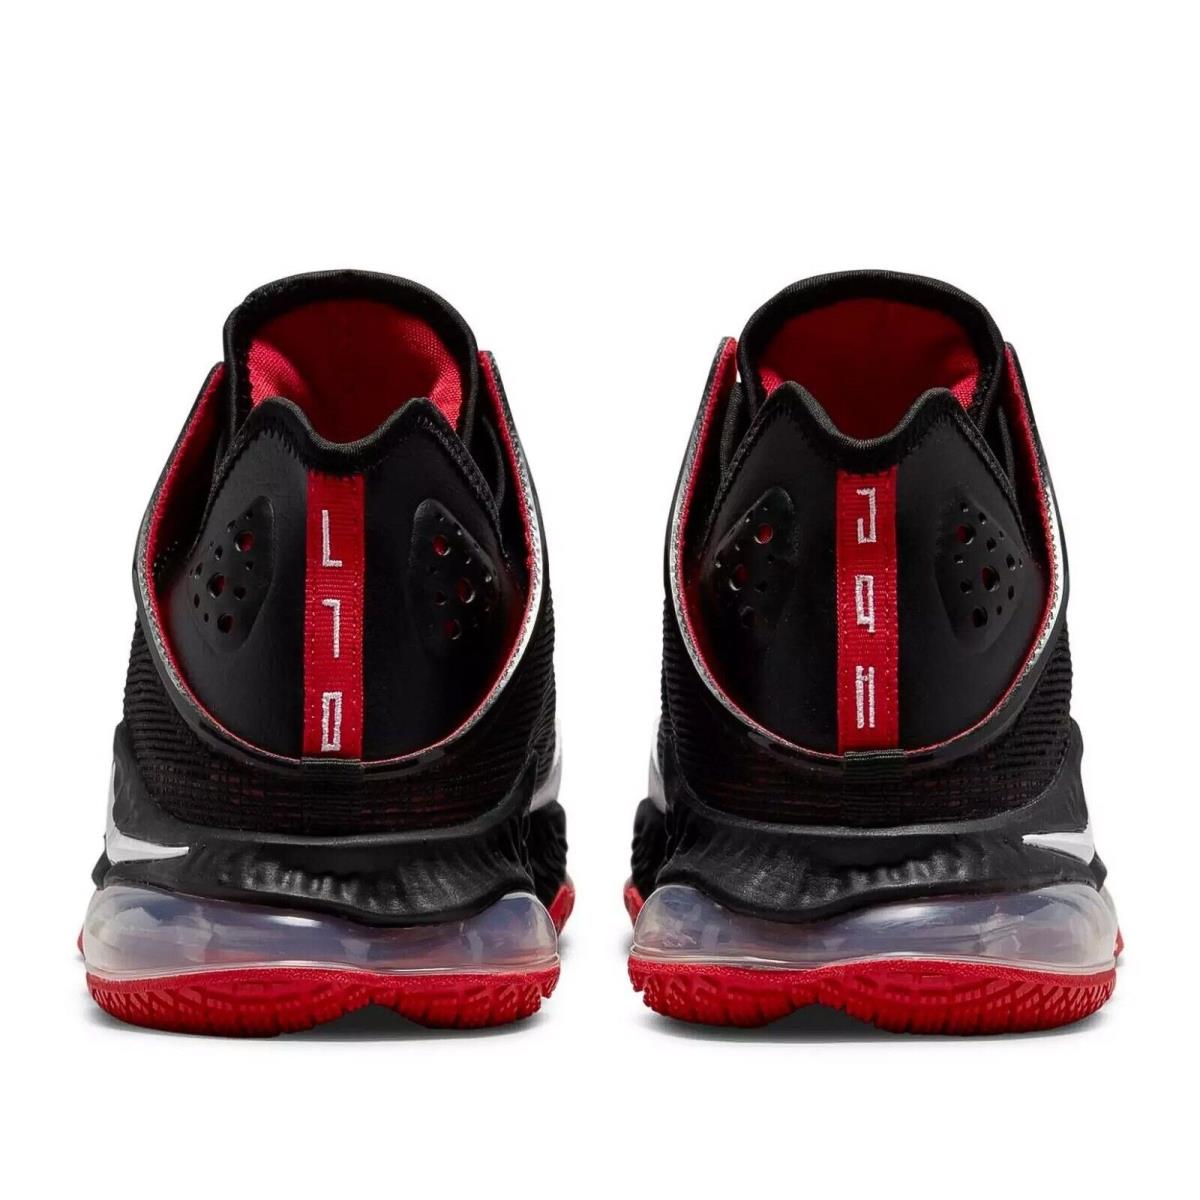 Nike shoes LeBron Low - Black/University Red/White 2